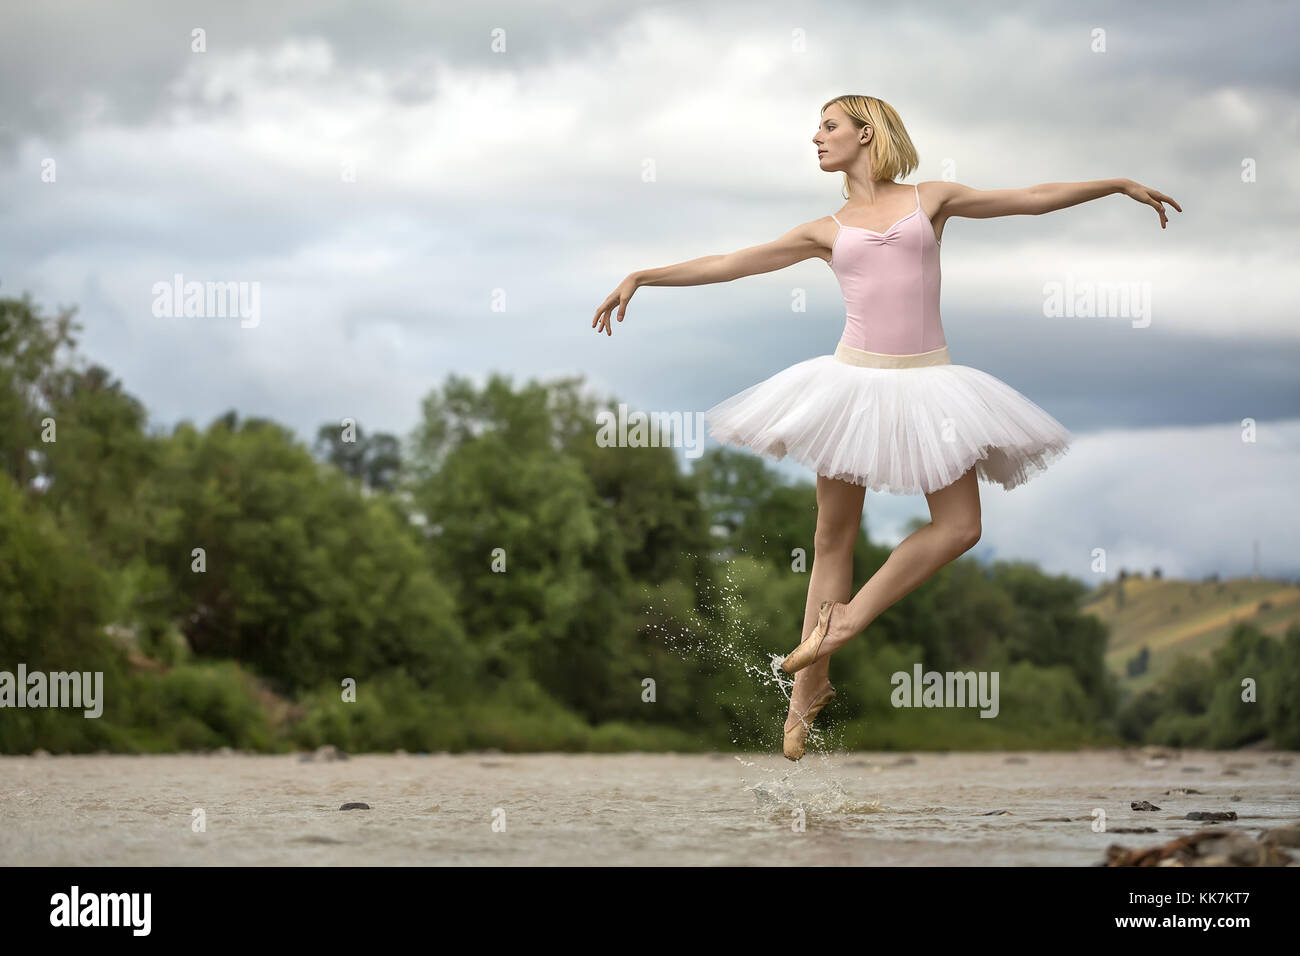 Ballerina jumping above river Stock Photo